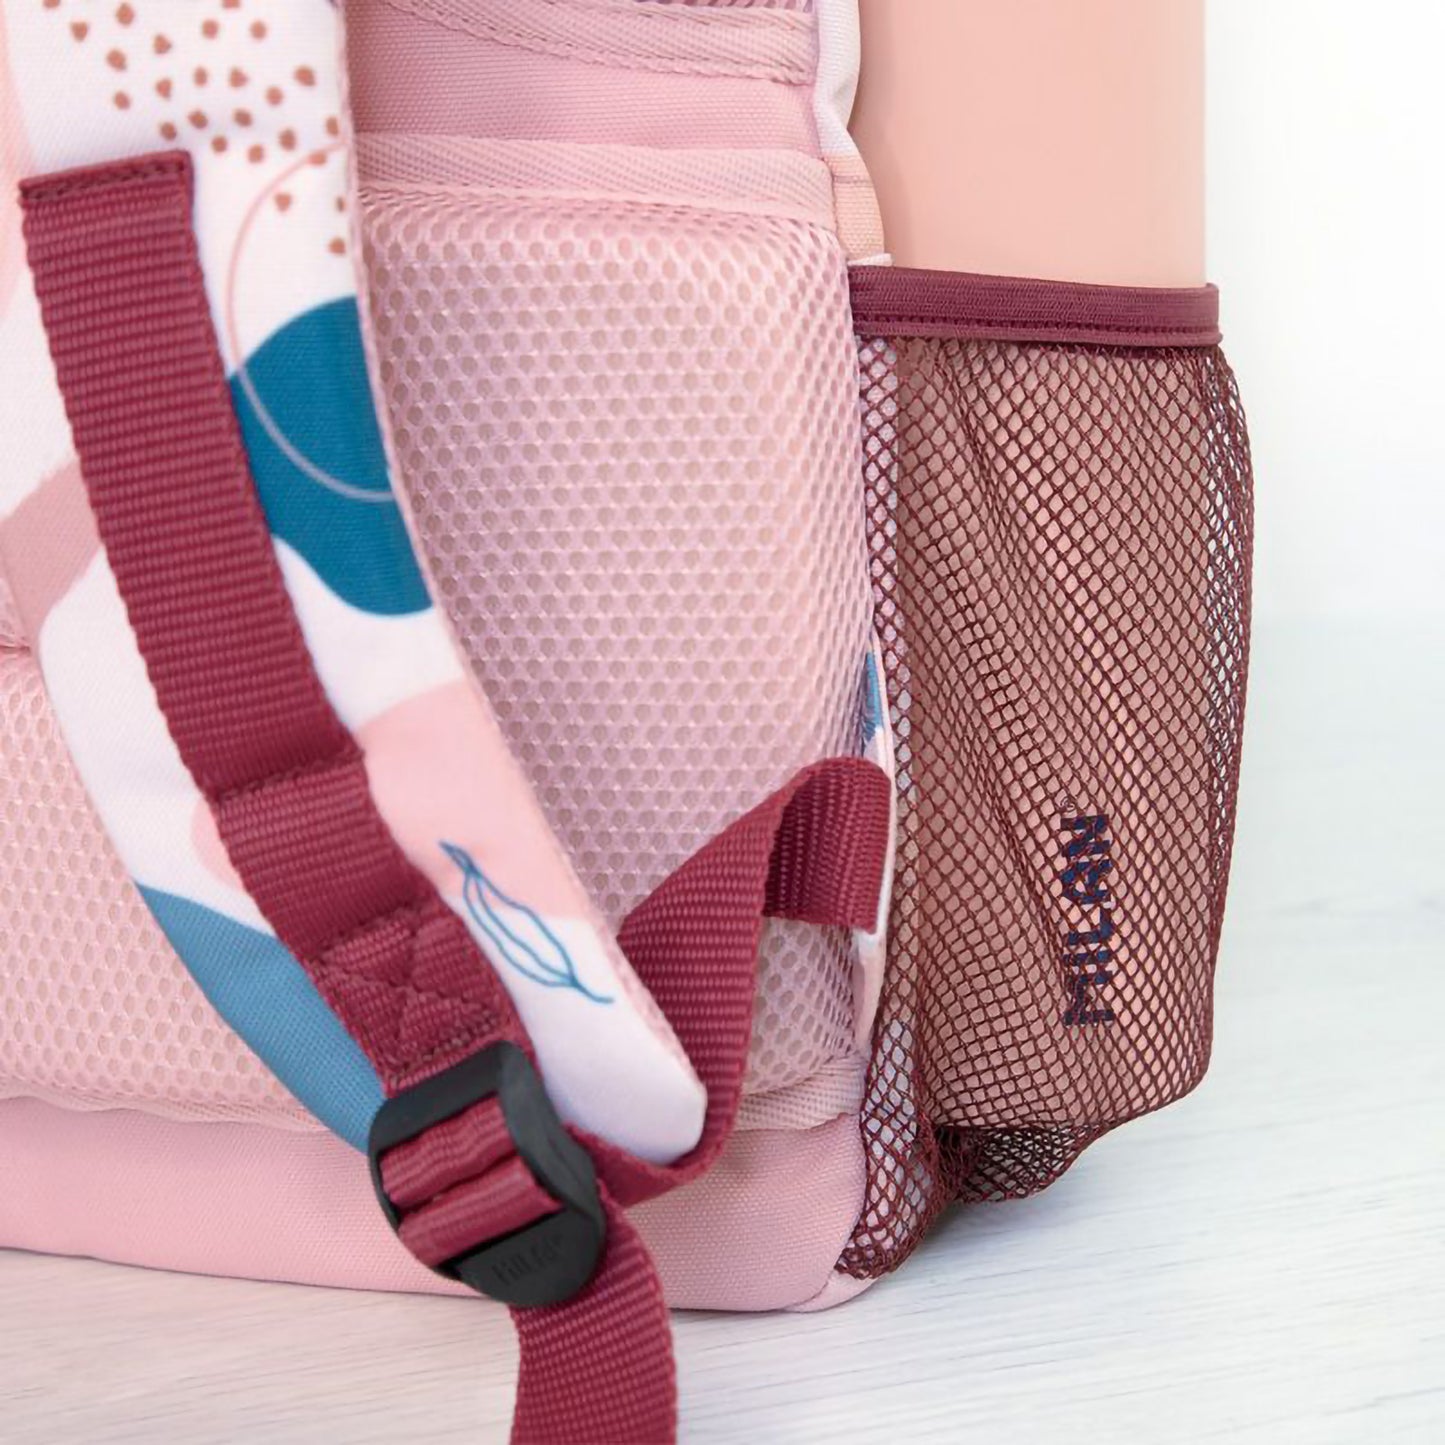 MILAN Large Backpack Slow Pink Multicolor